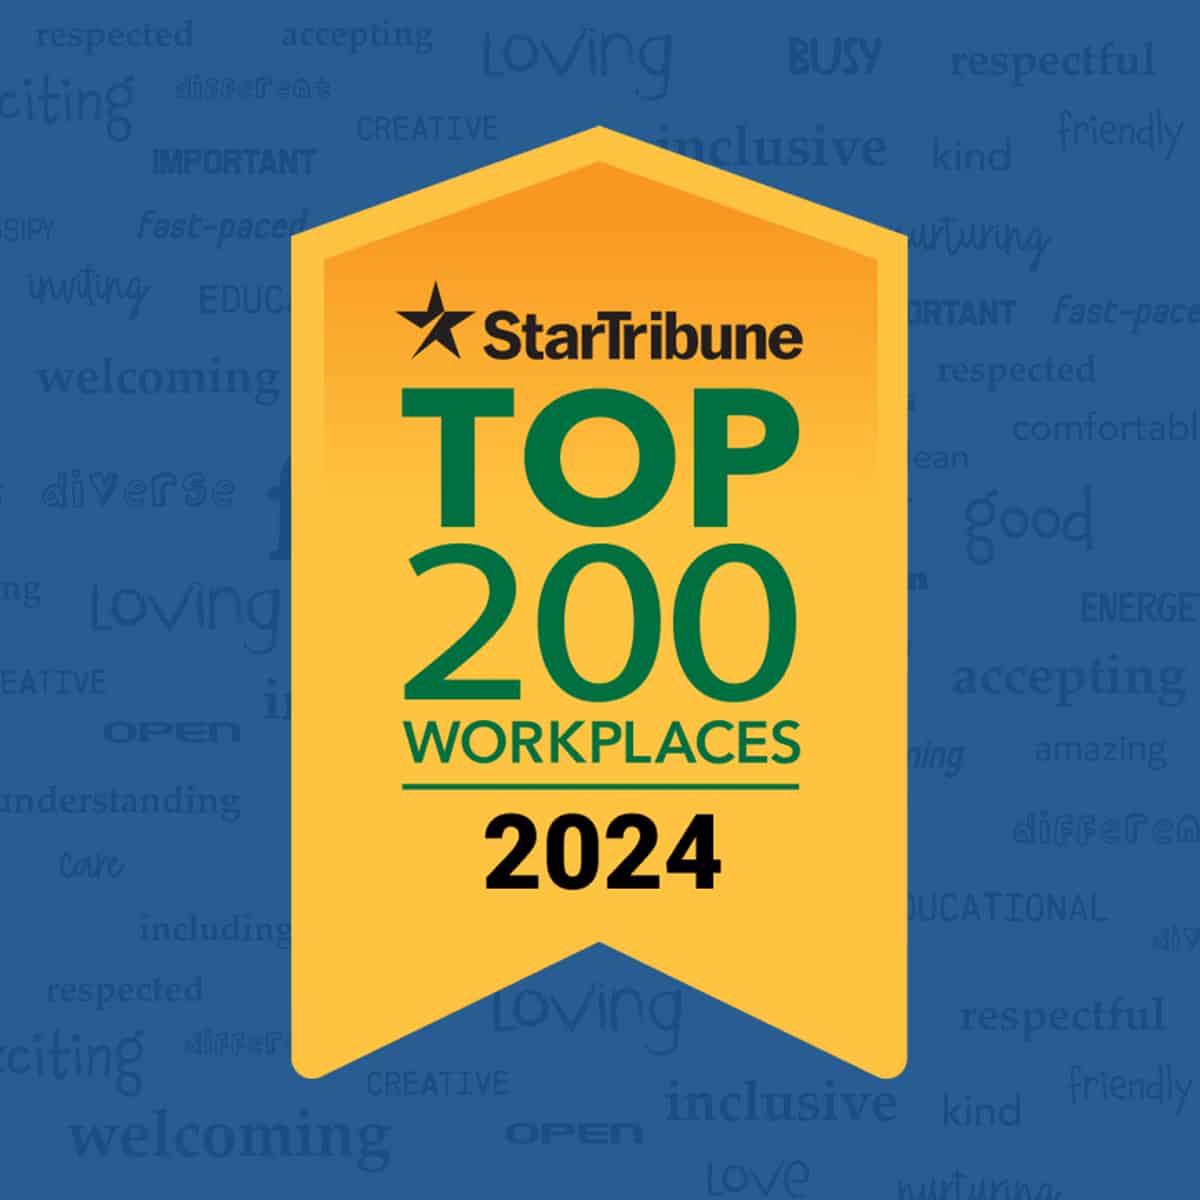 New Horizon Academy wins StarTribune Top 200 Workplaces 2024